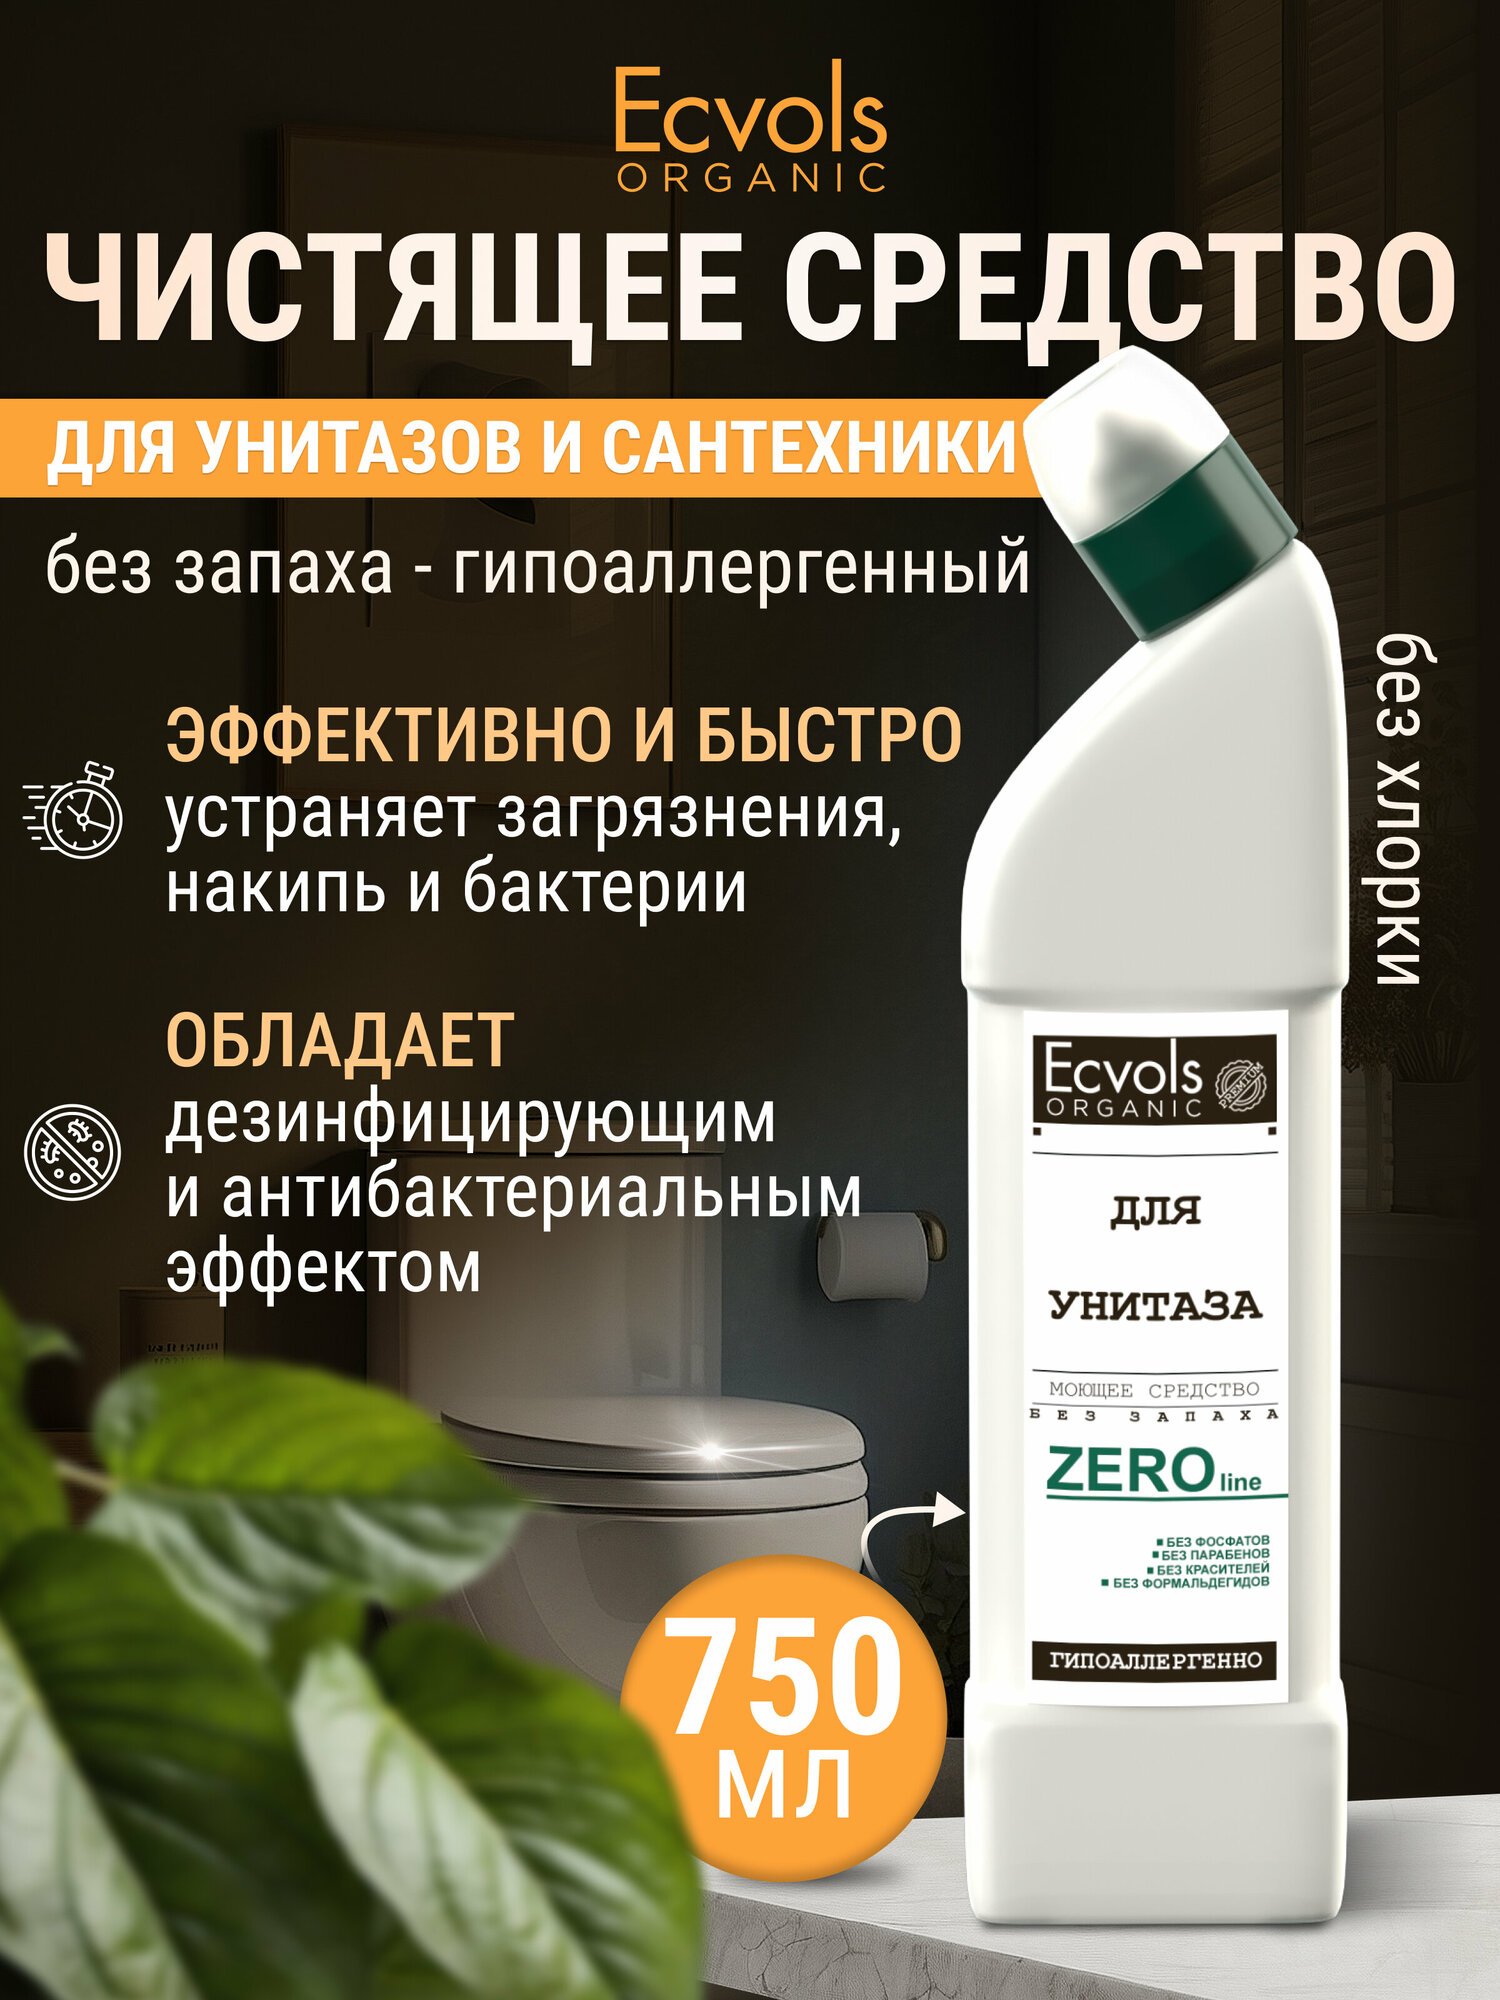 Средство для унитаза, чистки сантехники Ecvols Organic чистящее для ванной и туалета, антибактериальное, без хлора 750 мл без запаха